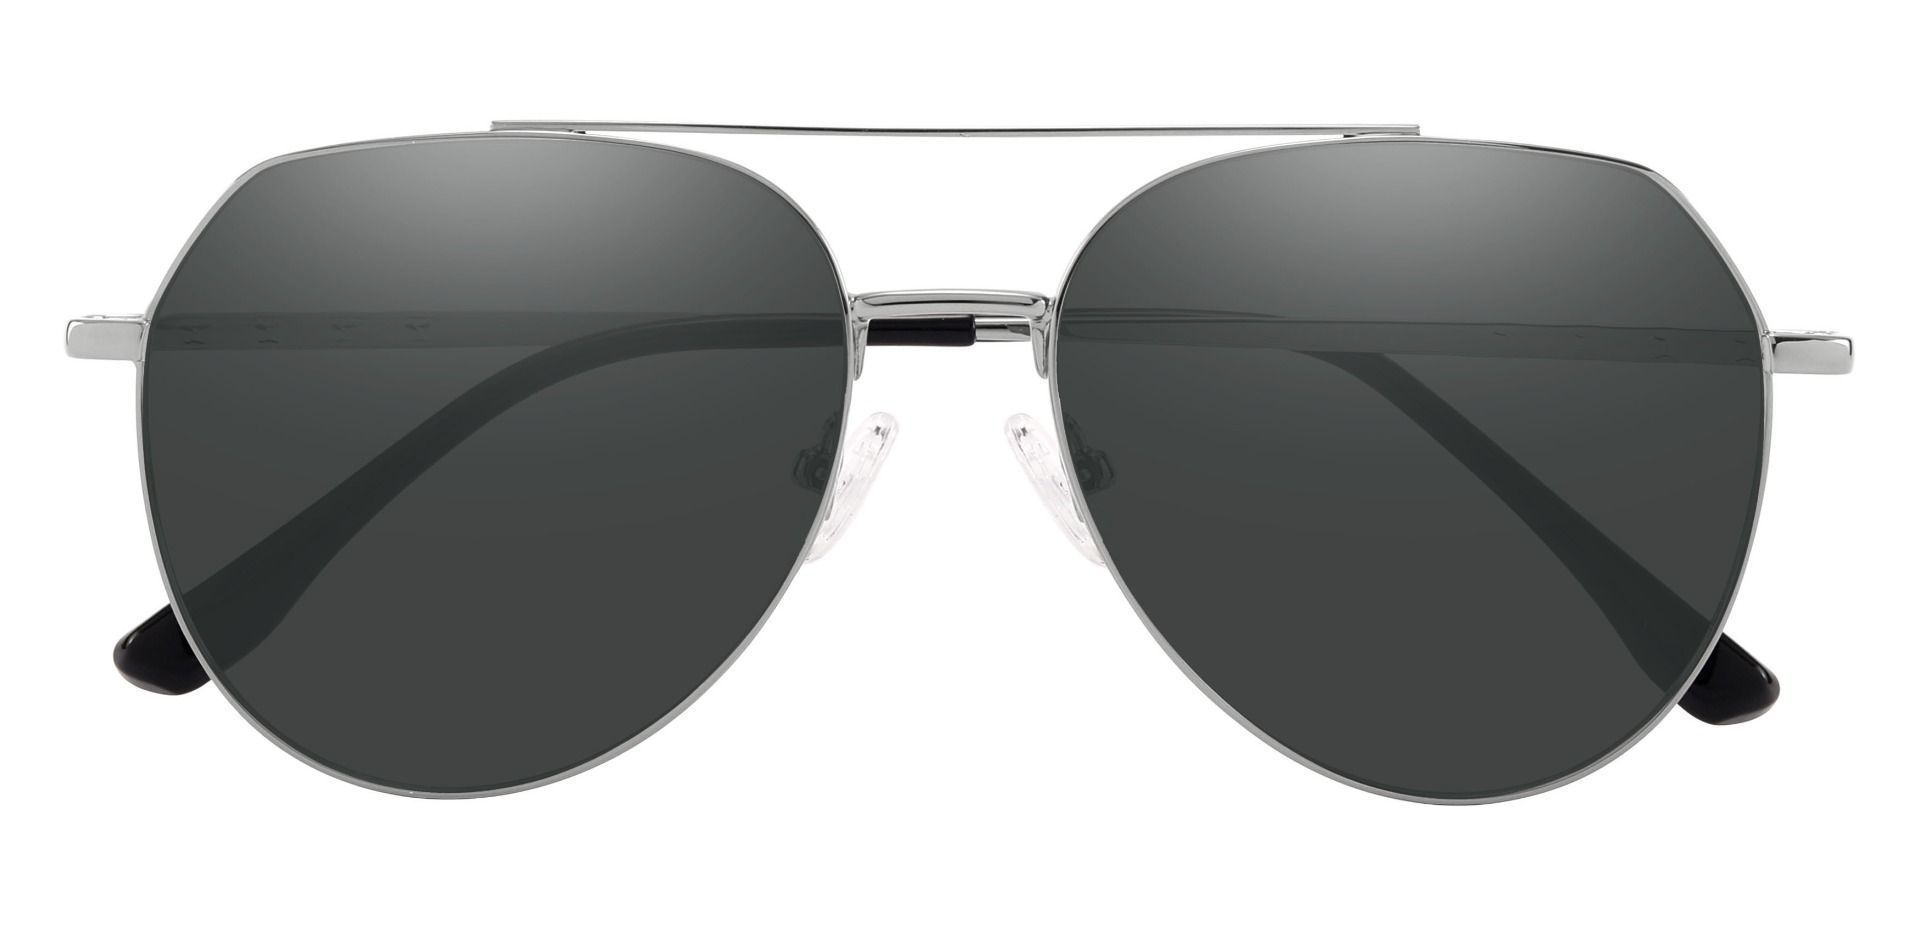 Wexford Aviator Prescription Sunglasses - Silver Frame With Gray Lenses